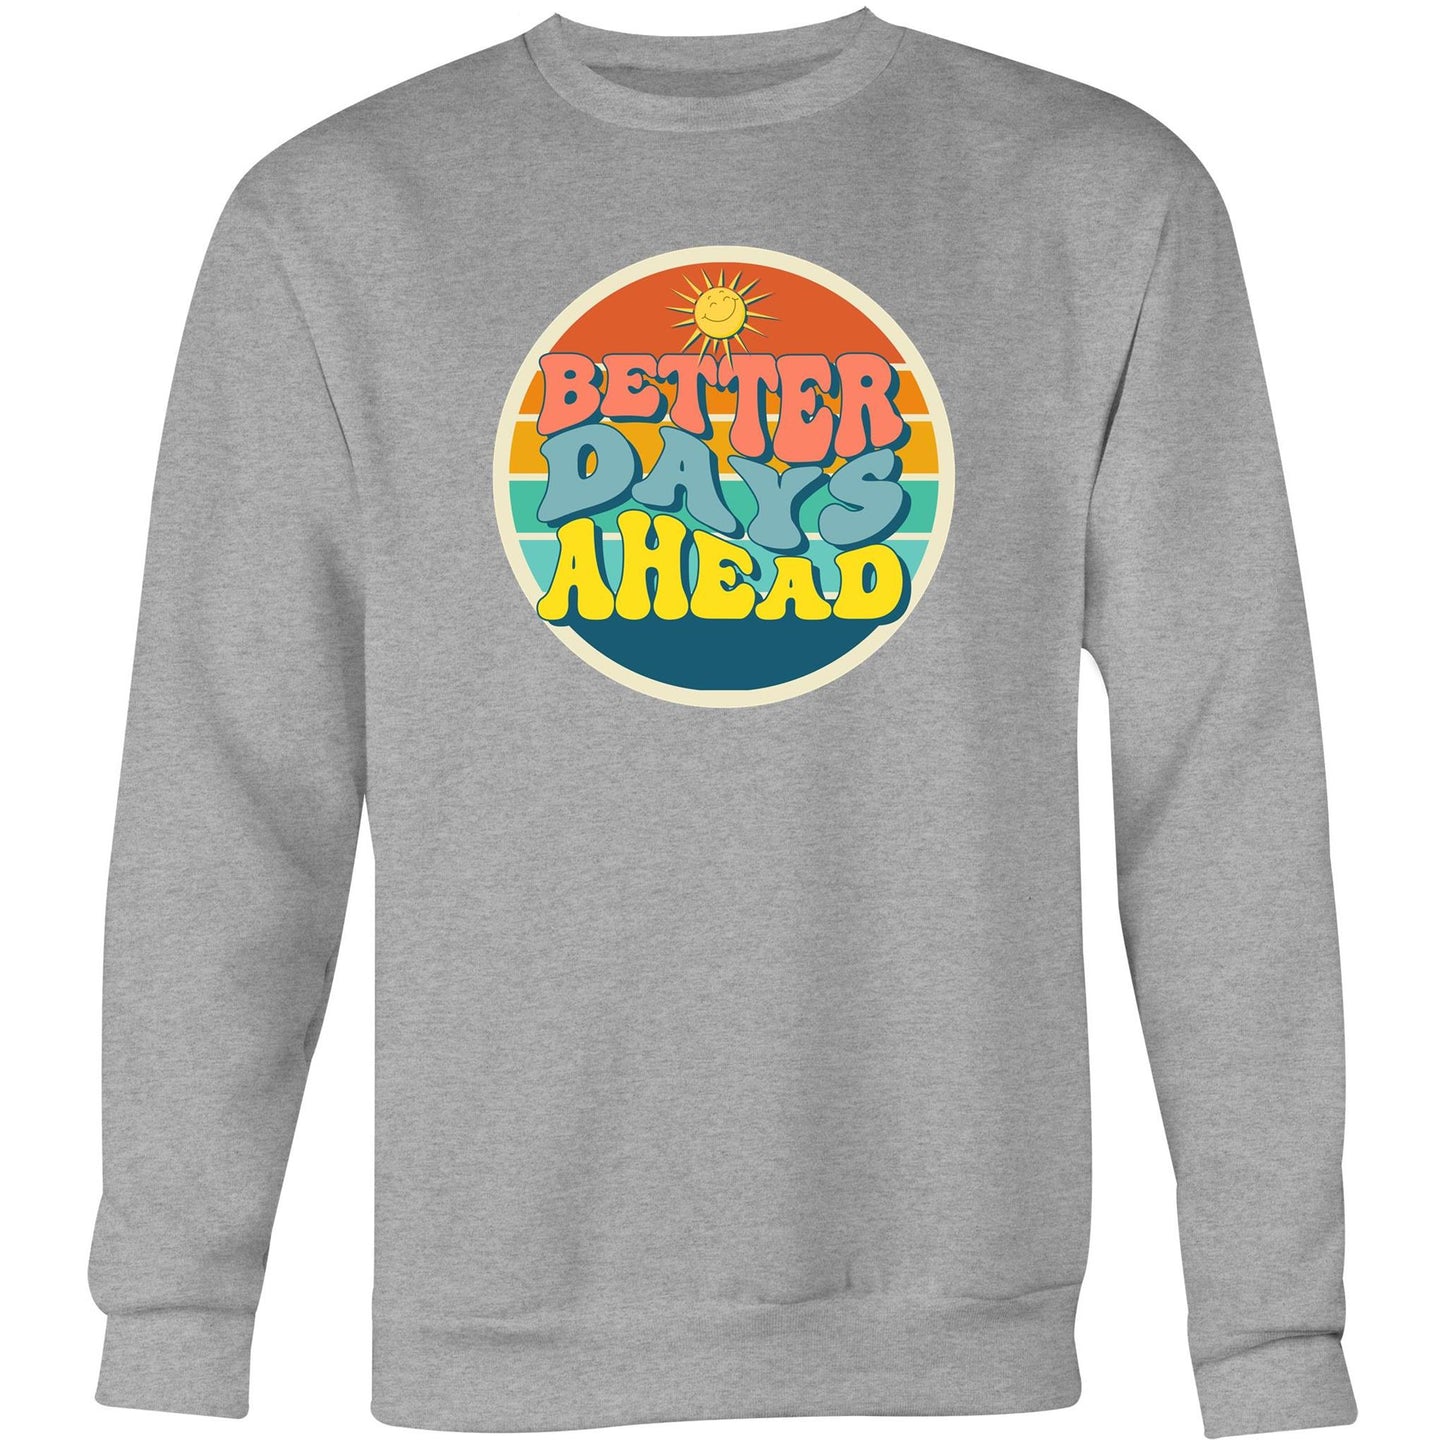 Better Days Ahead - Crew Sweatshirt Grey Marle Sweatshirt Motivation Retro